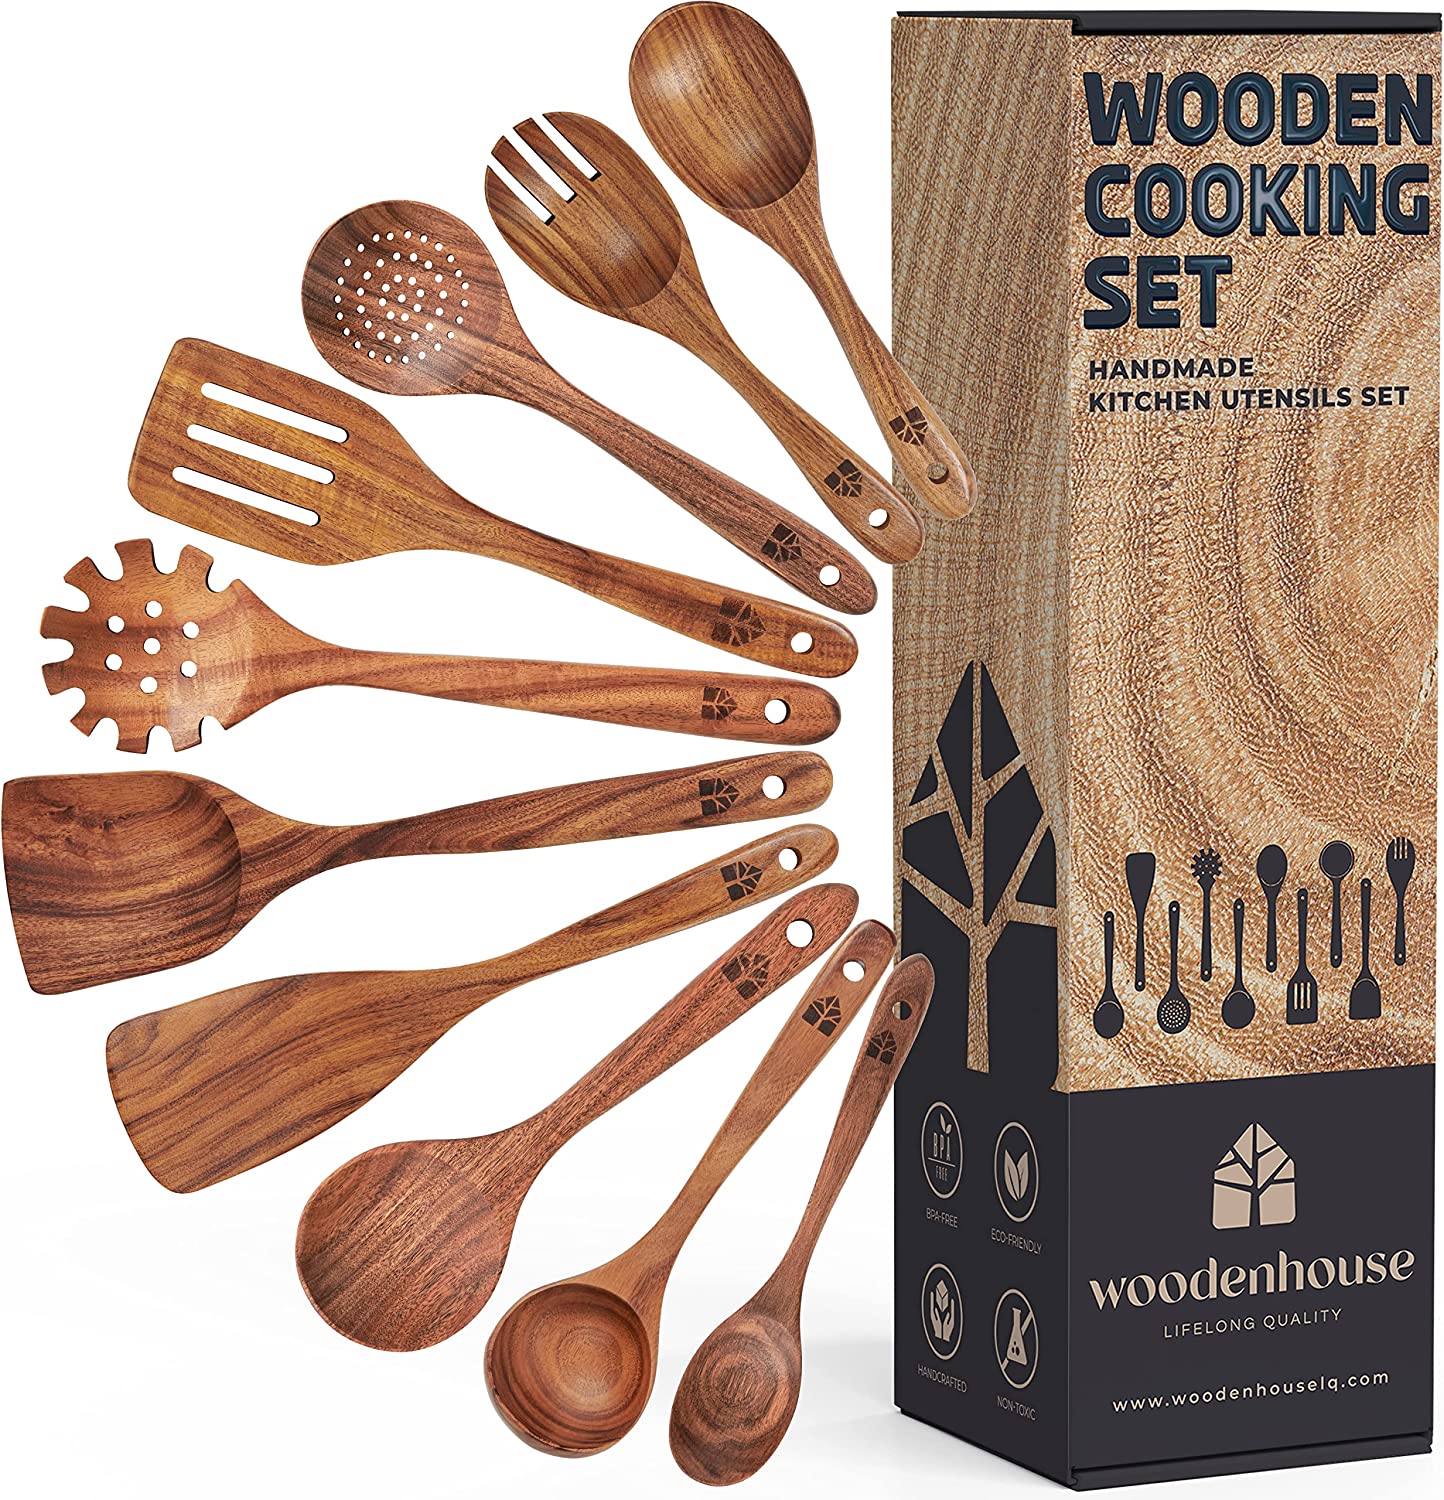 Buy Wholesale China High Quality Teak Wood Kitchen Utensils Set